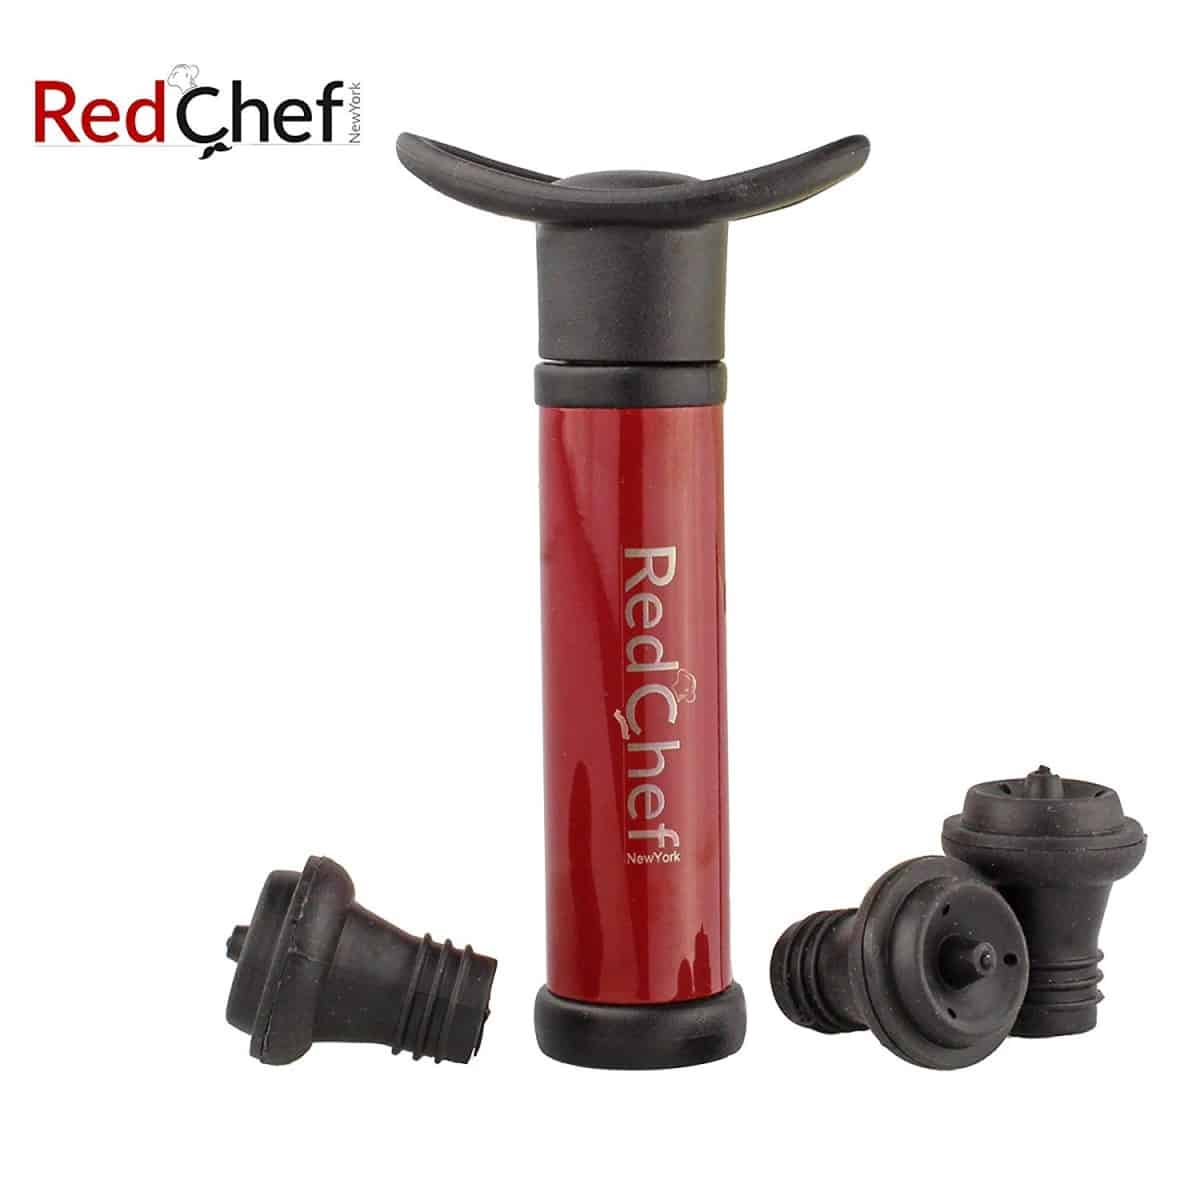 RedChefNY Wine Saver | Get These Tech Gadgets Via Amazon Prime